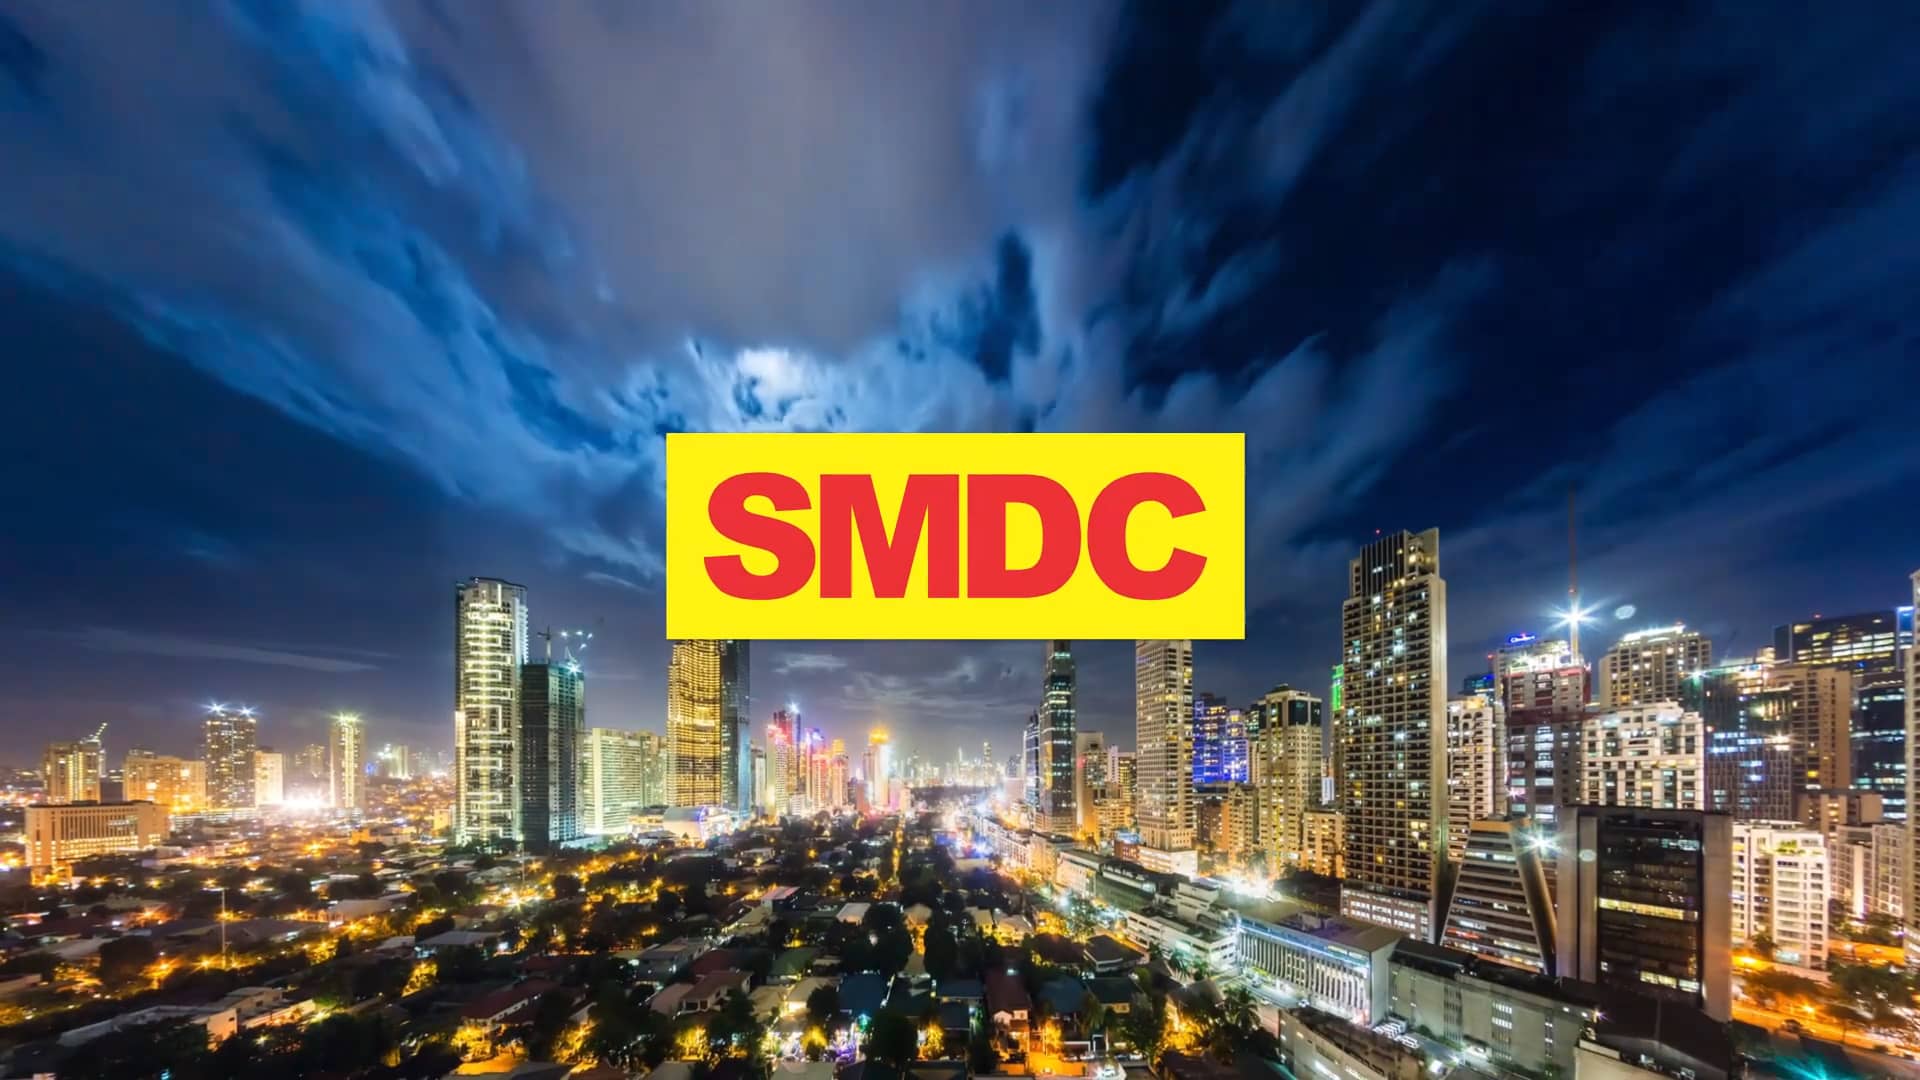 SMDC CORPORATE VIDEO on Vimeo